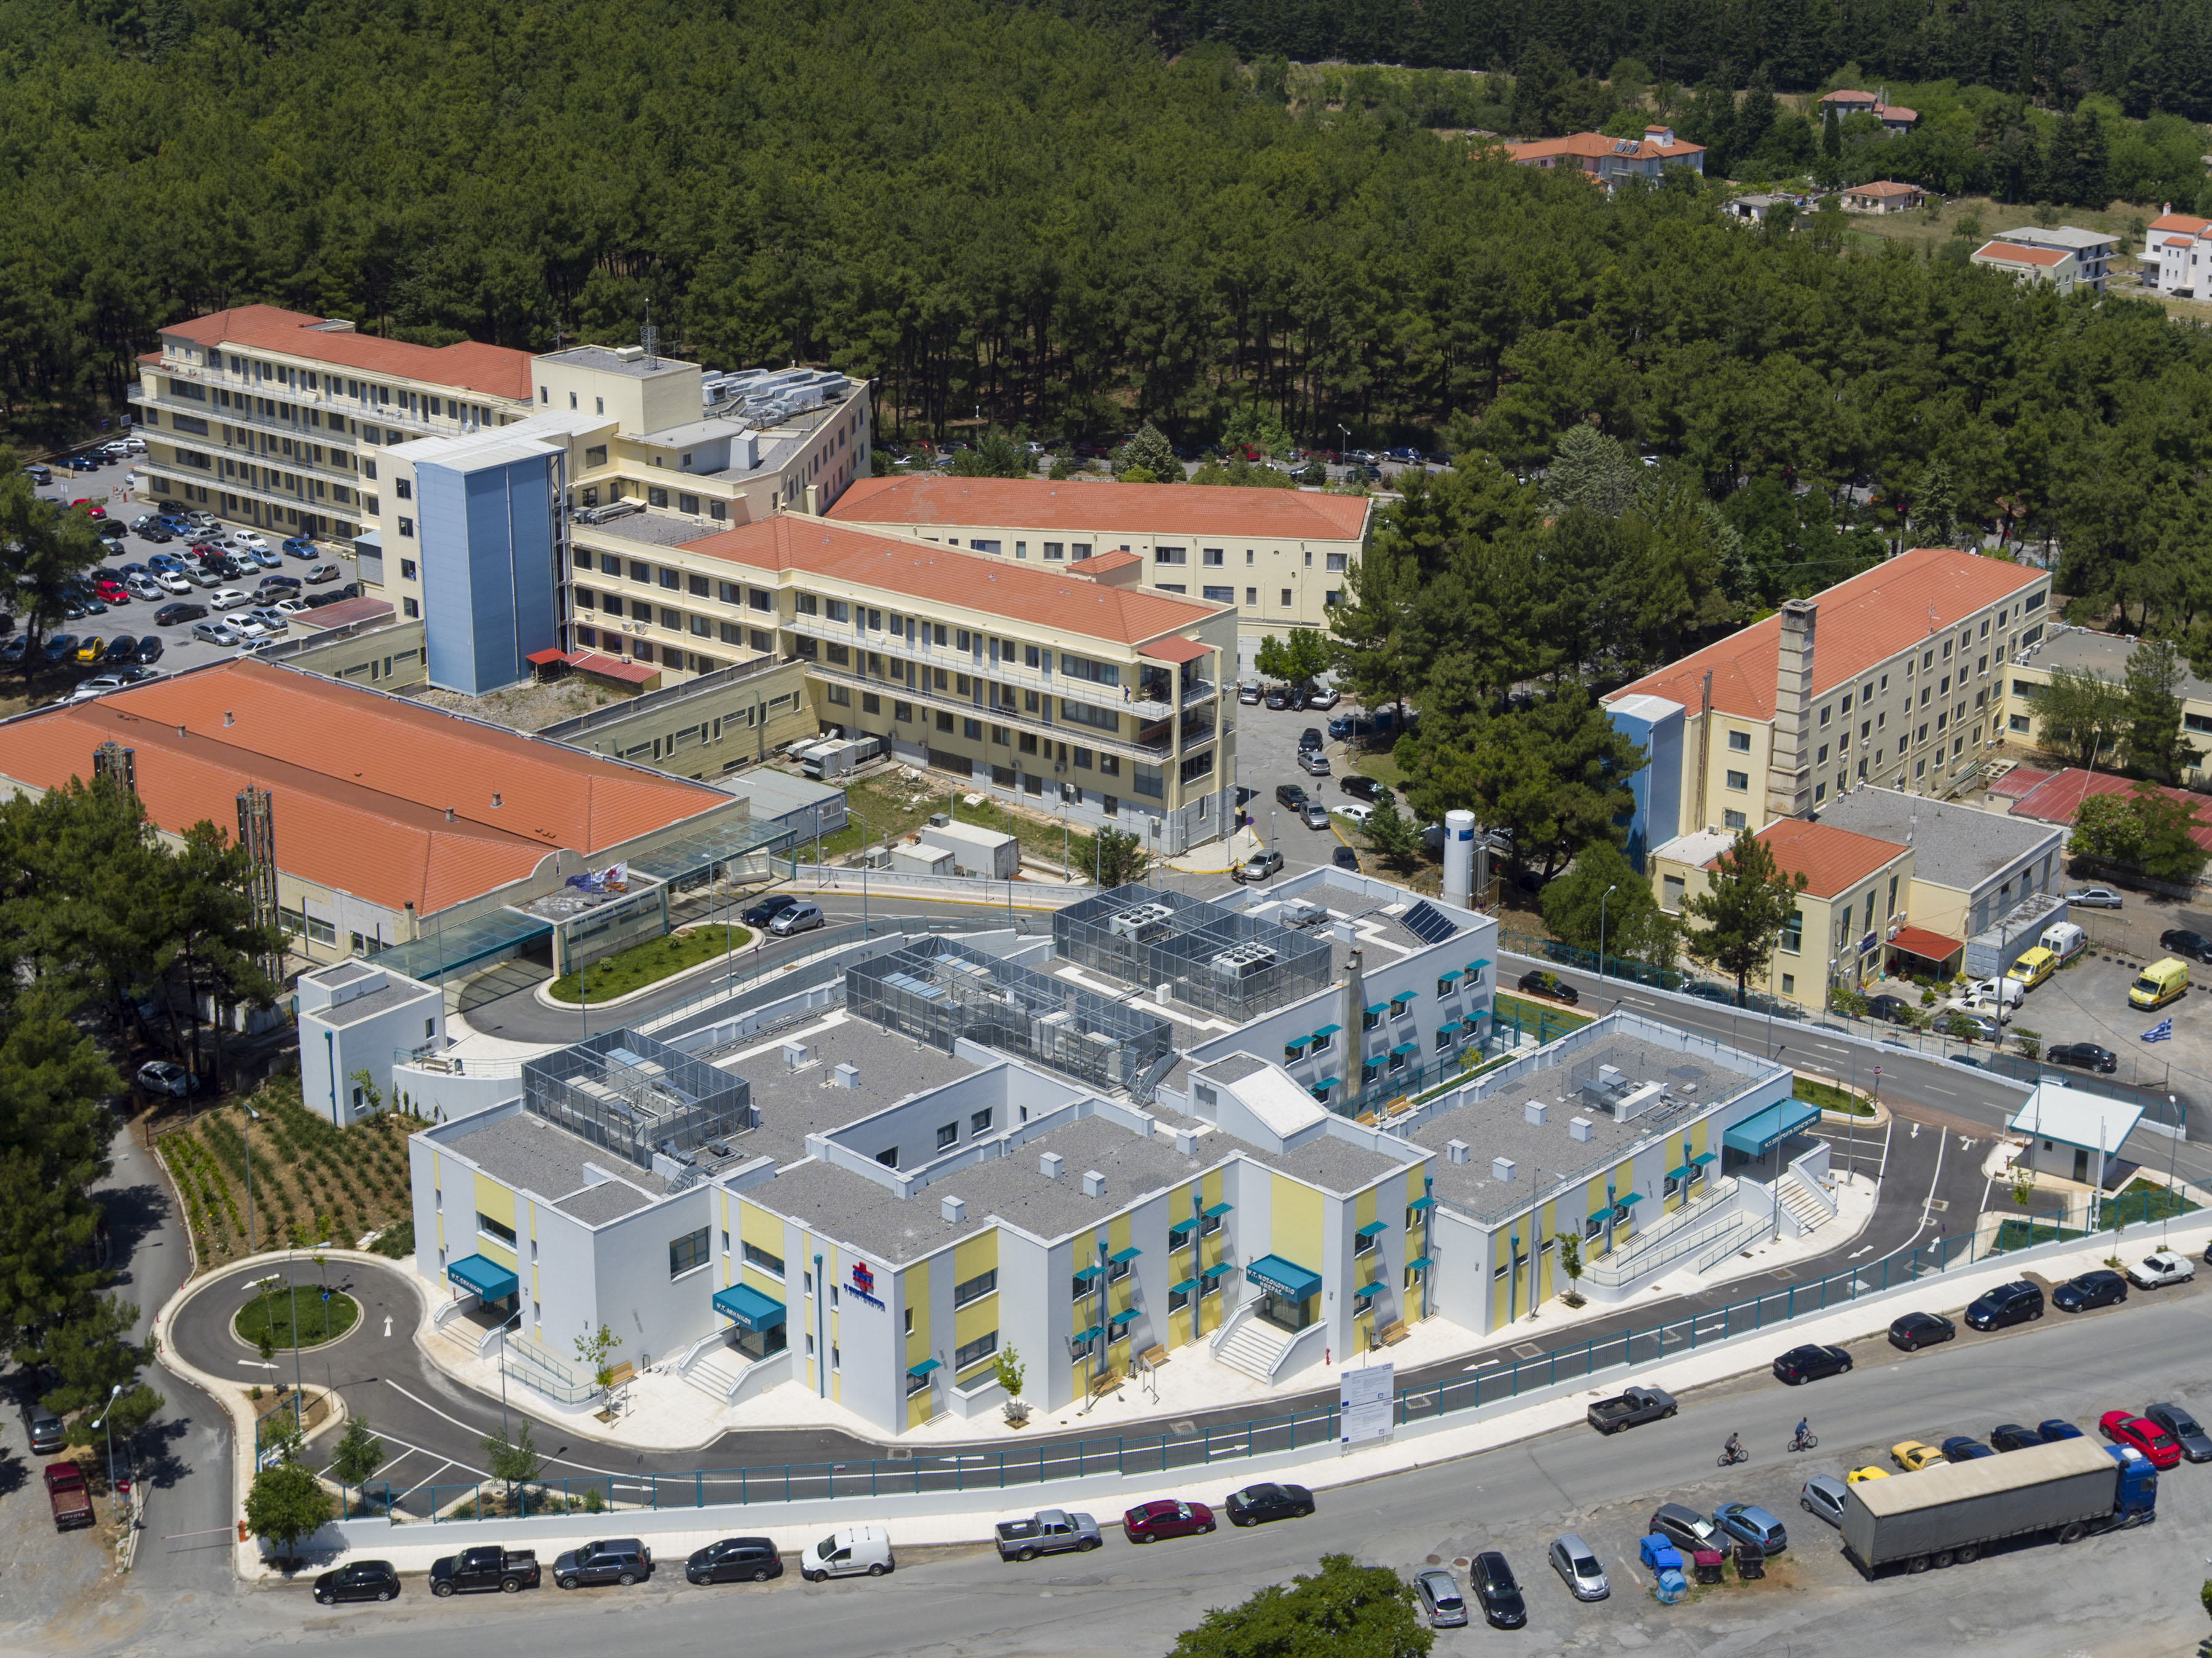 More information about "Νοσοκομεία ΕΣΥ: Τα 60+ νοσοκομεία που αναβαθμίζονται ενεργειακά μέσω ΕΣΠΑ"